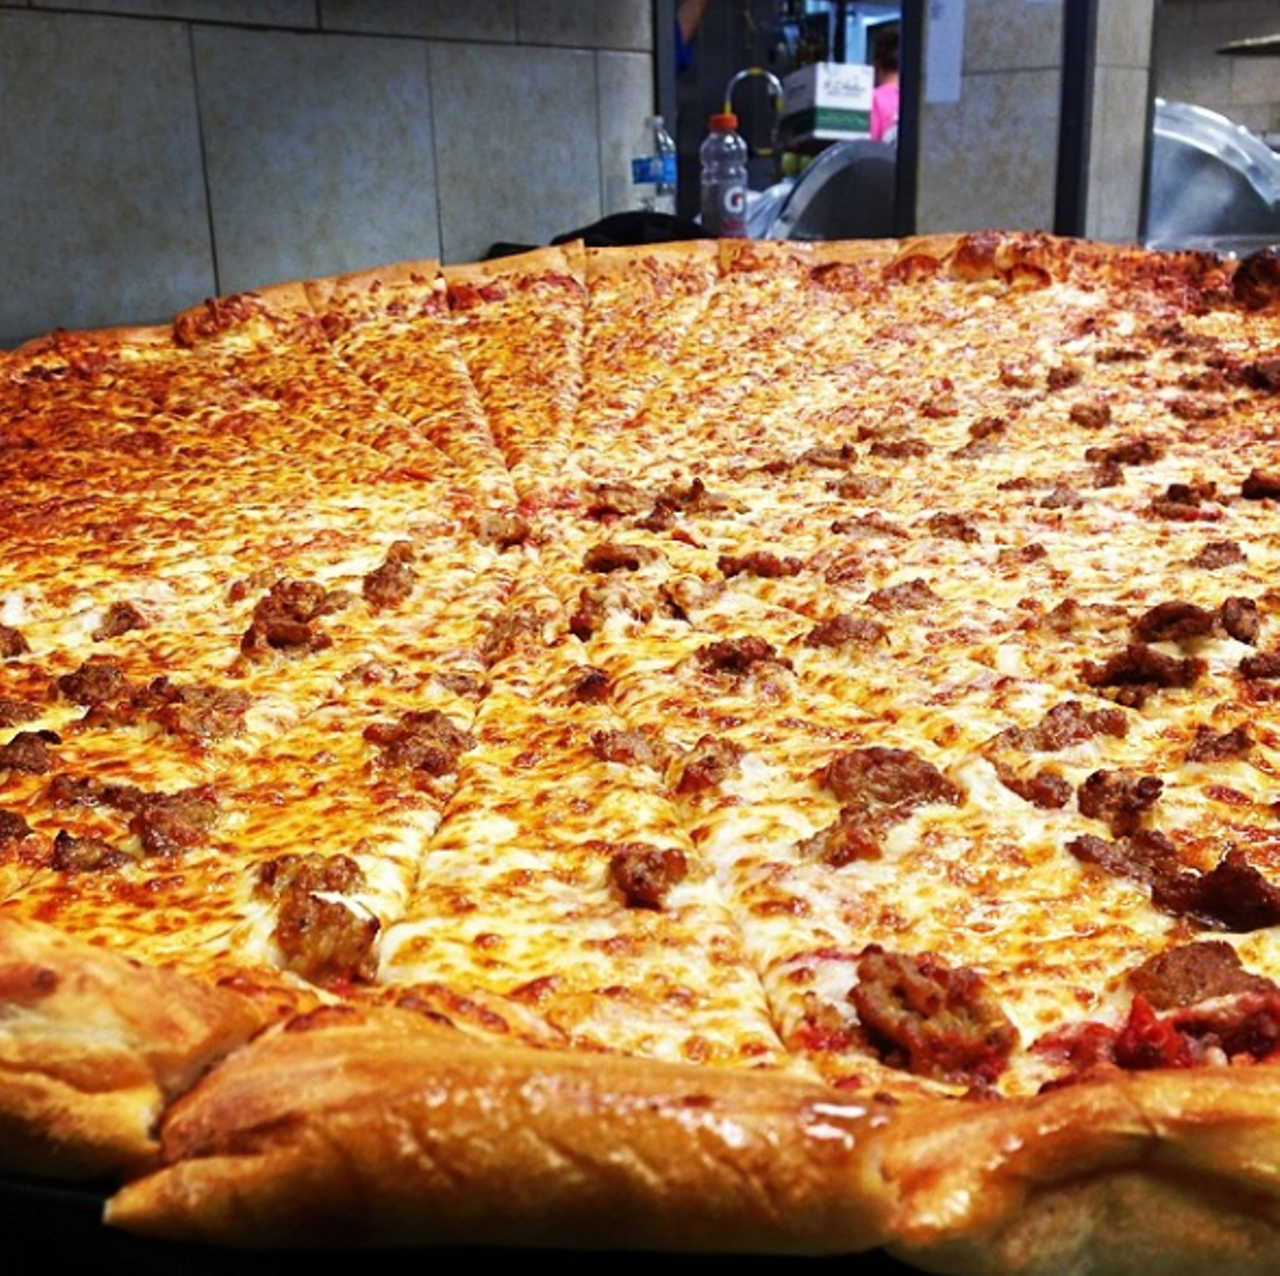 Big Lou's Pizza
2048 S Ww White Rd, (210) 337-0707
Photo via Instagram/biglouspizza